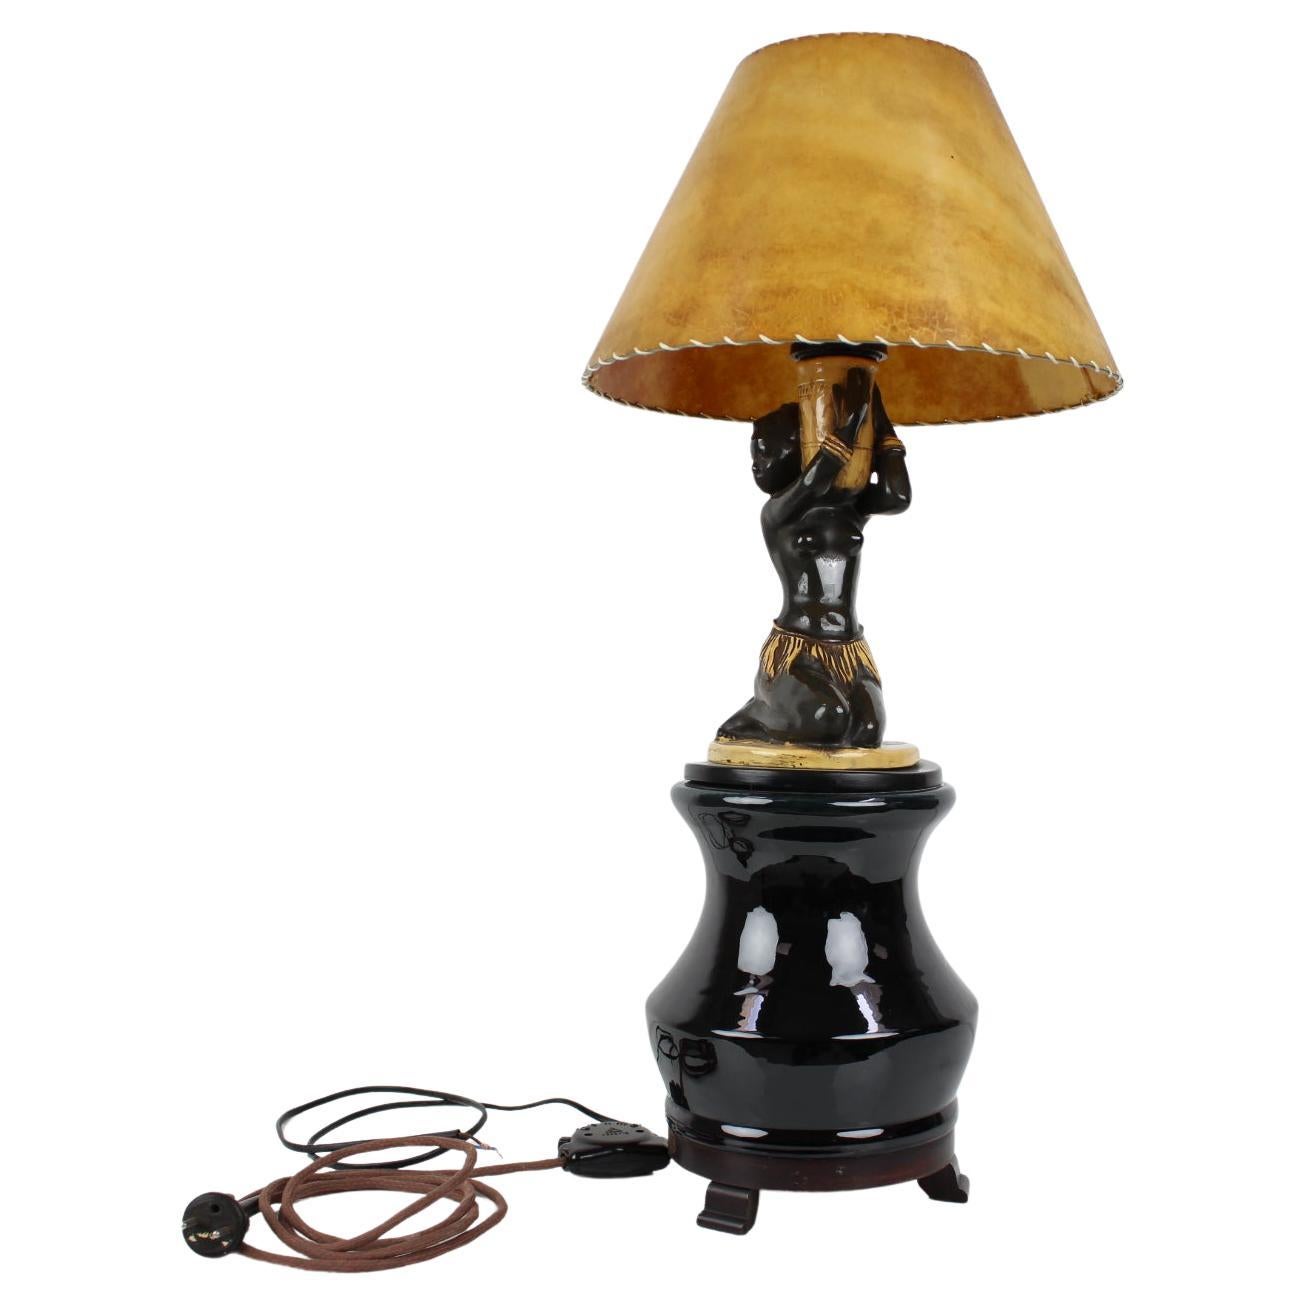 Art Deco Lamp with Loudspeaker, Stilton, 1930s, Czechoslovakia